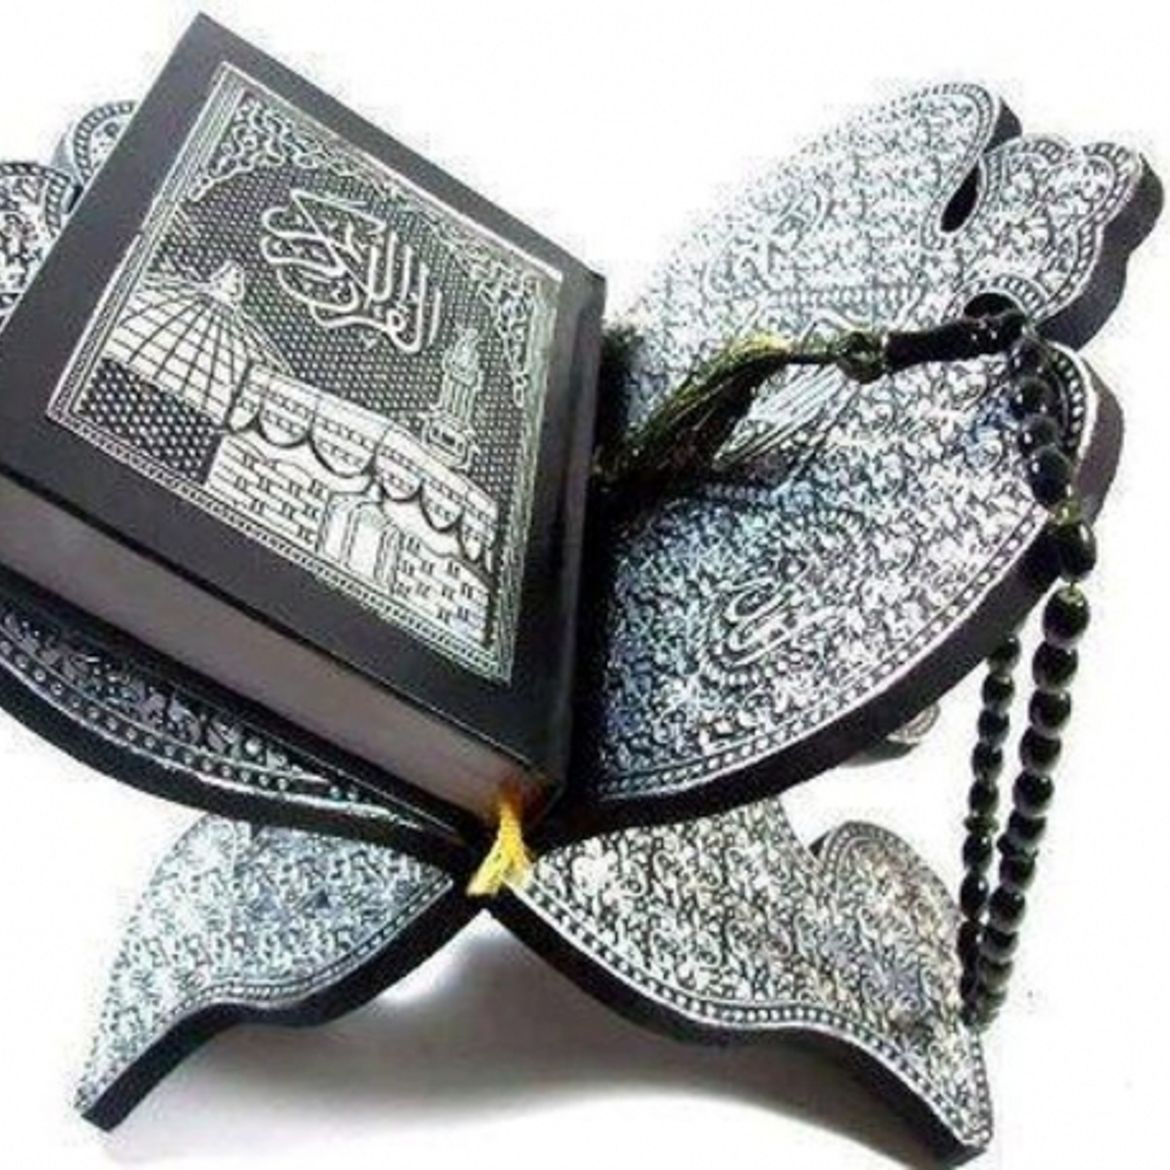 Quron kitob. Коран. Kepah. Мусульманские предметы. Красивый Коран.